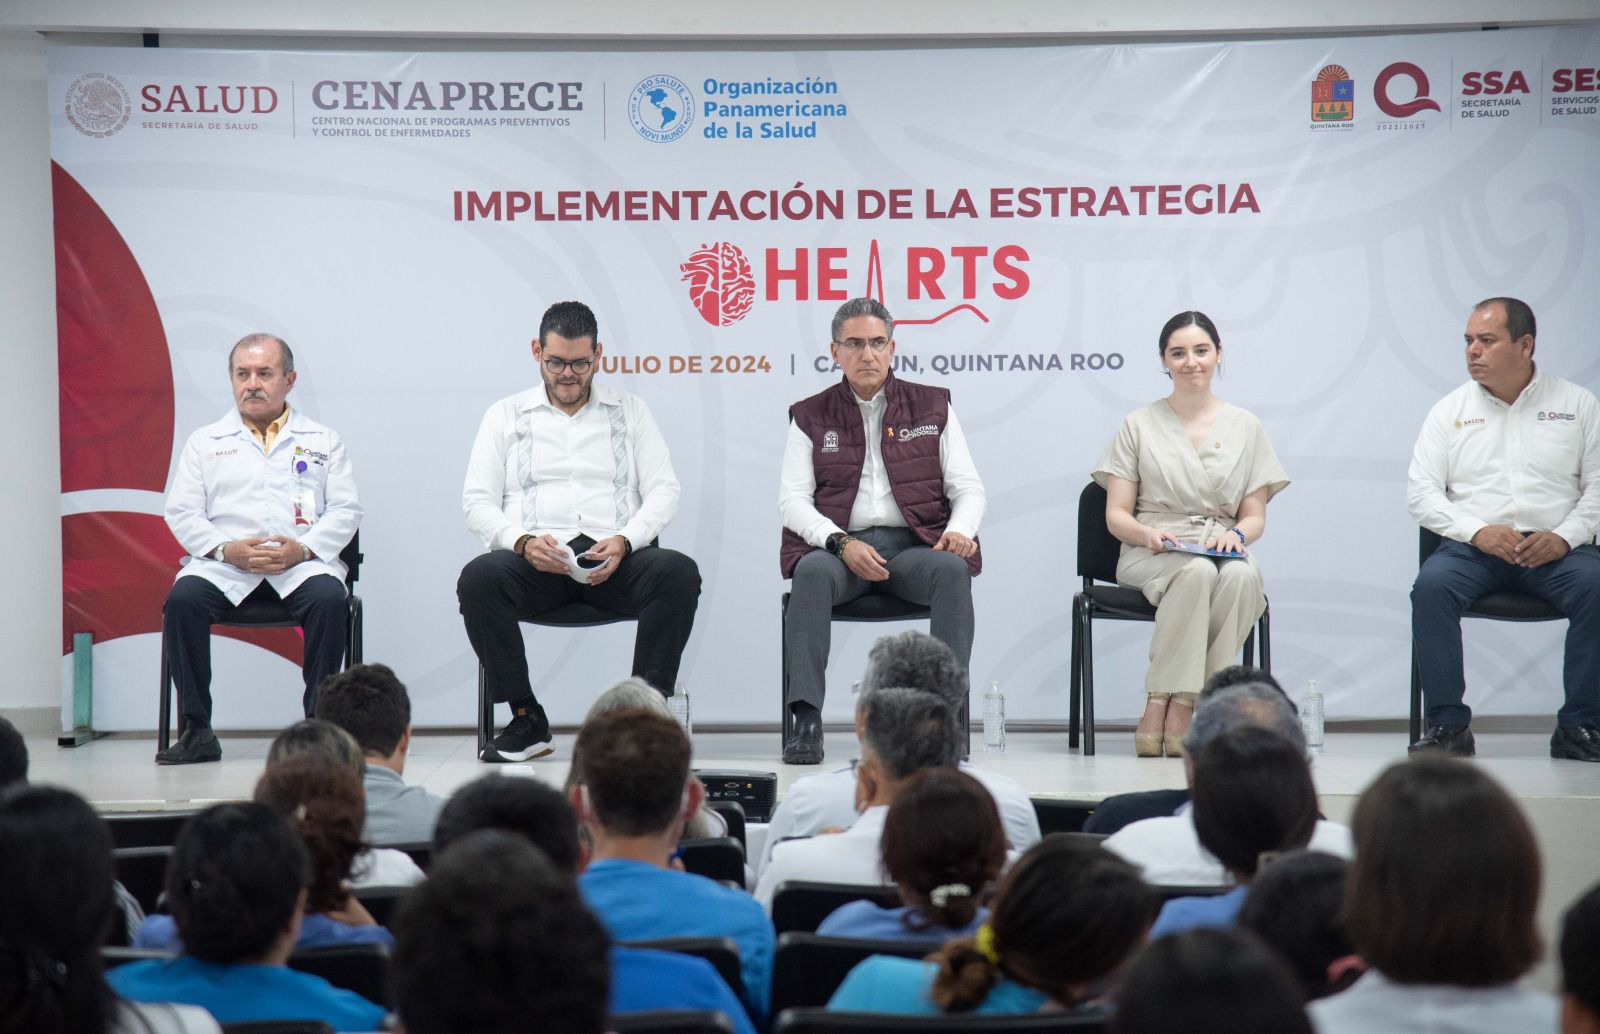 Quintana Roo adopta la estrategia Hearts de la OPS para combatir enfermedades cardiovasculares